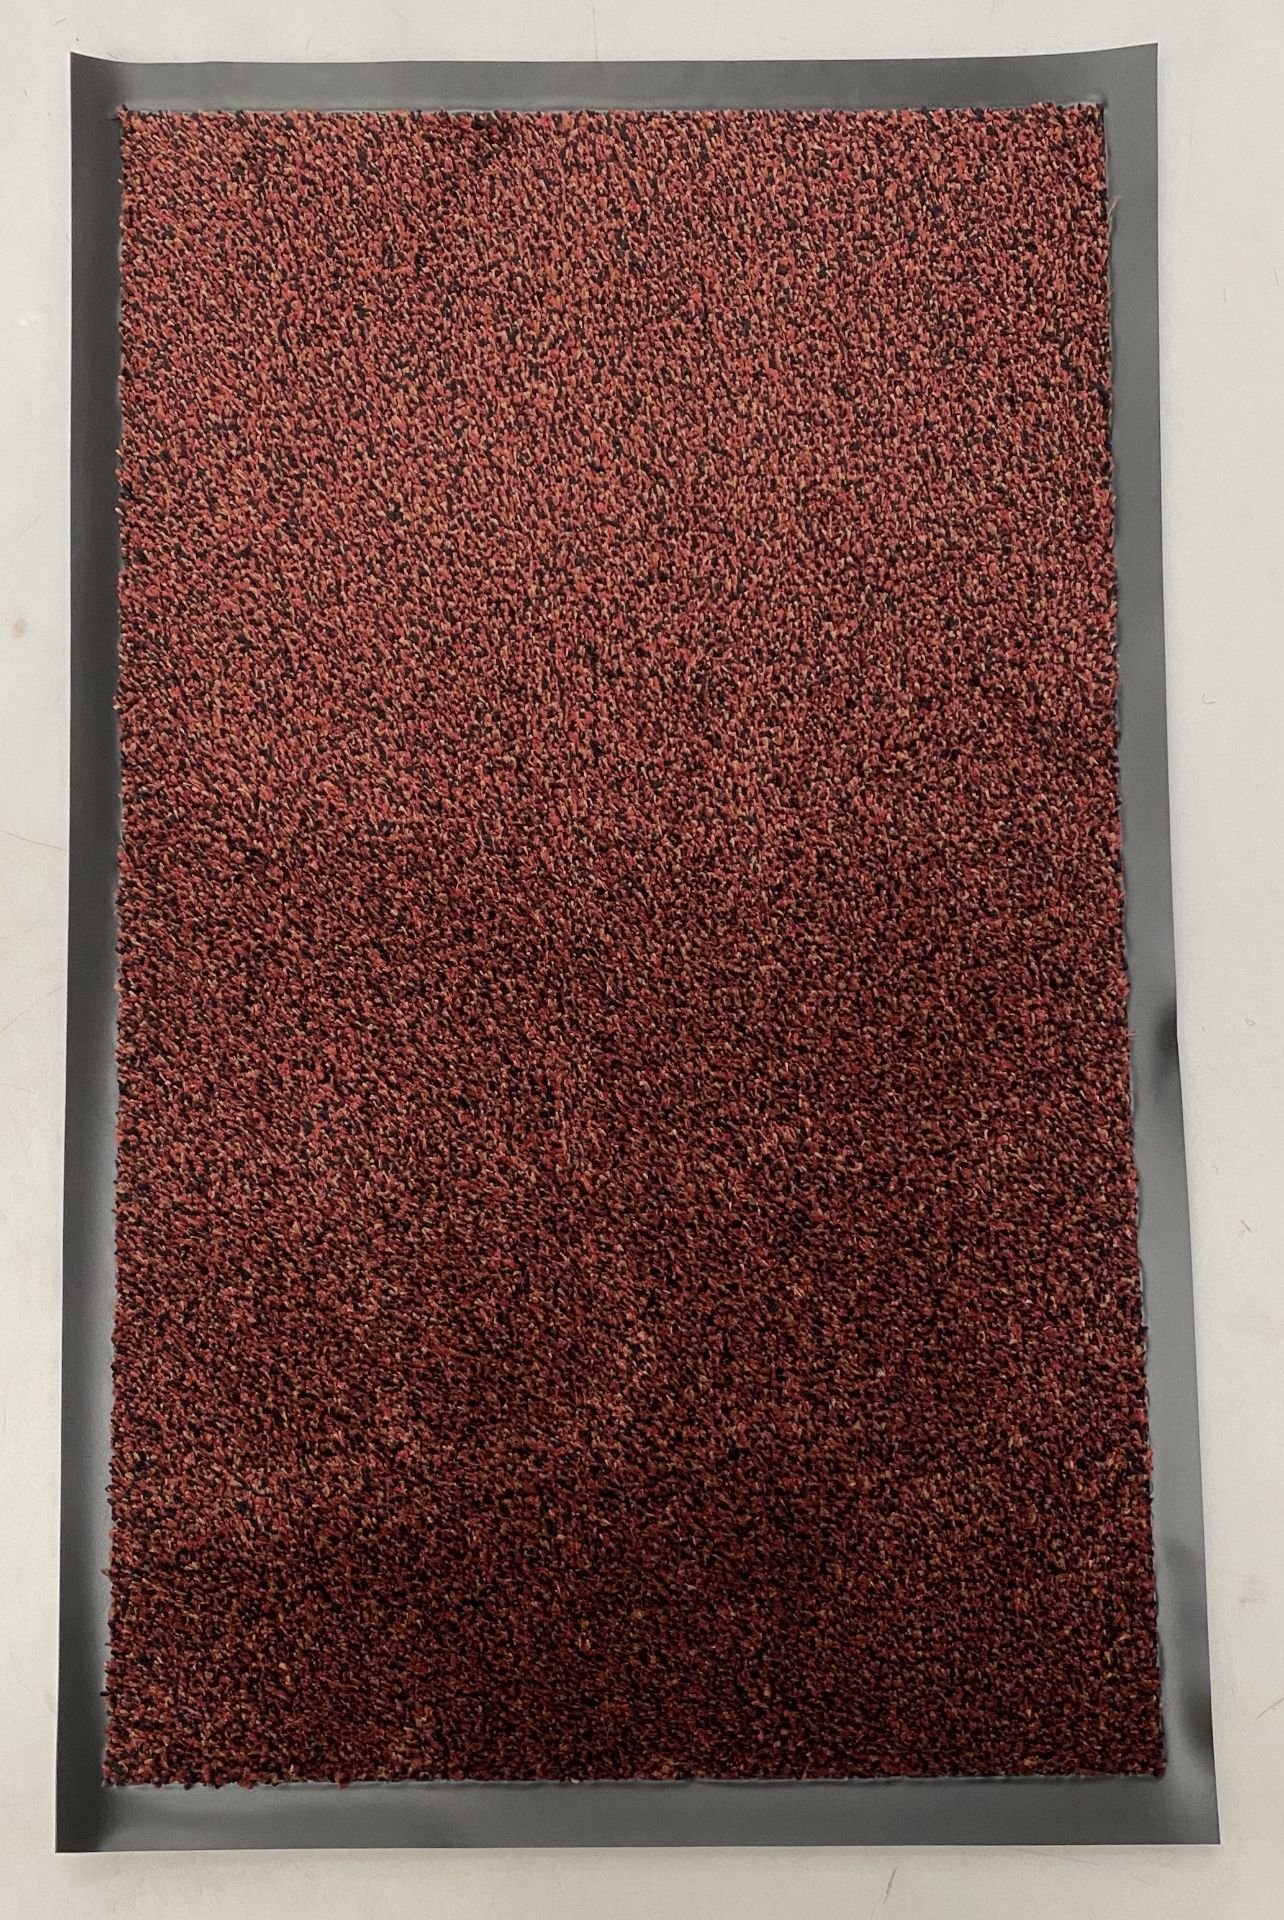 10 x Red/black rubber backed barrier mats - 80cm x 50cm